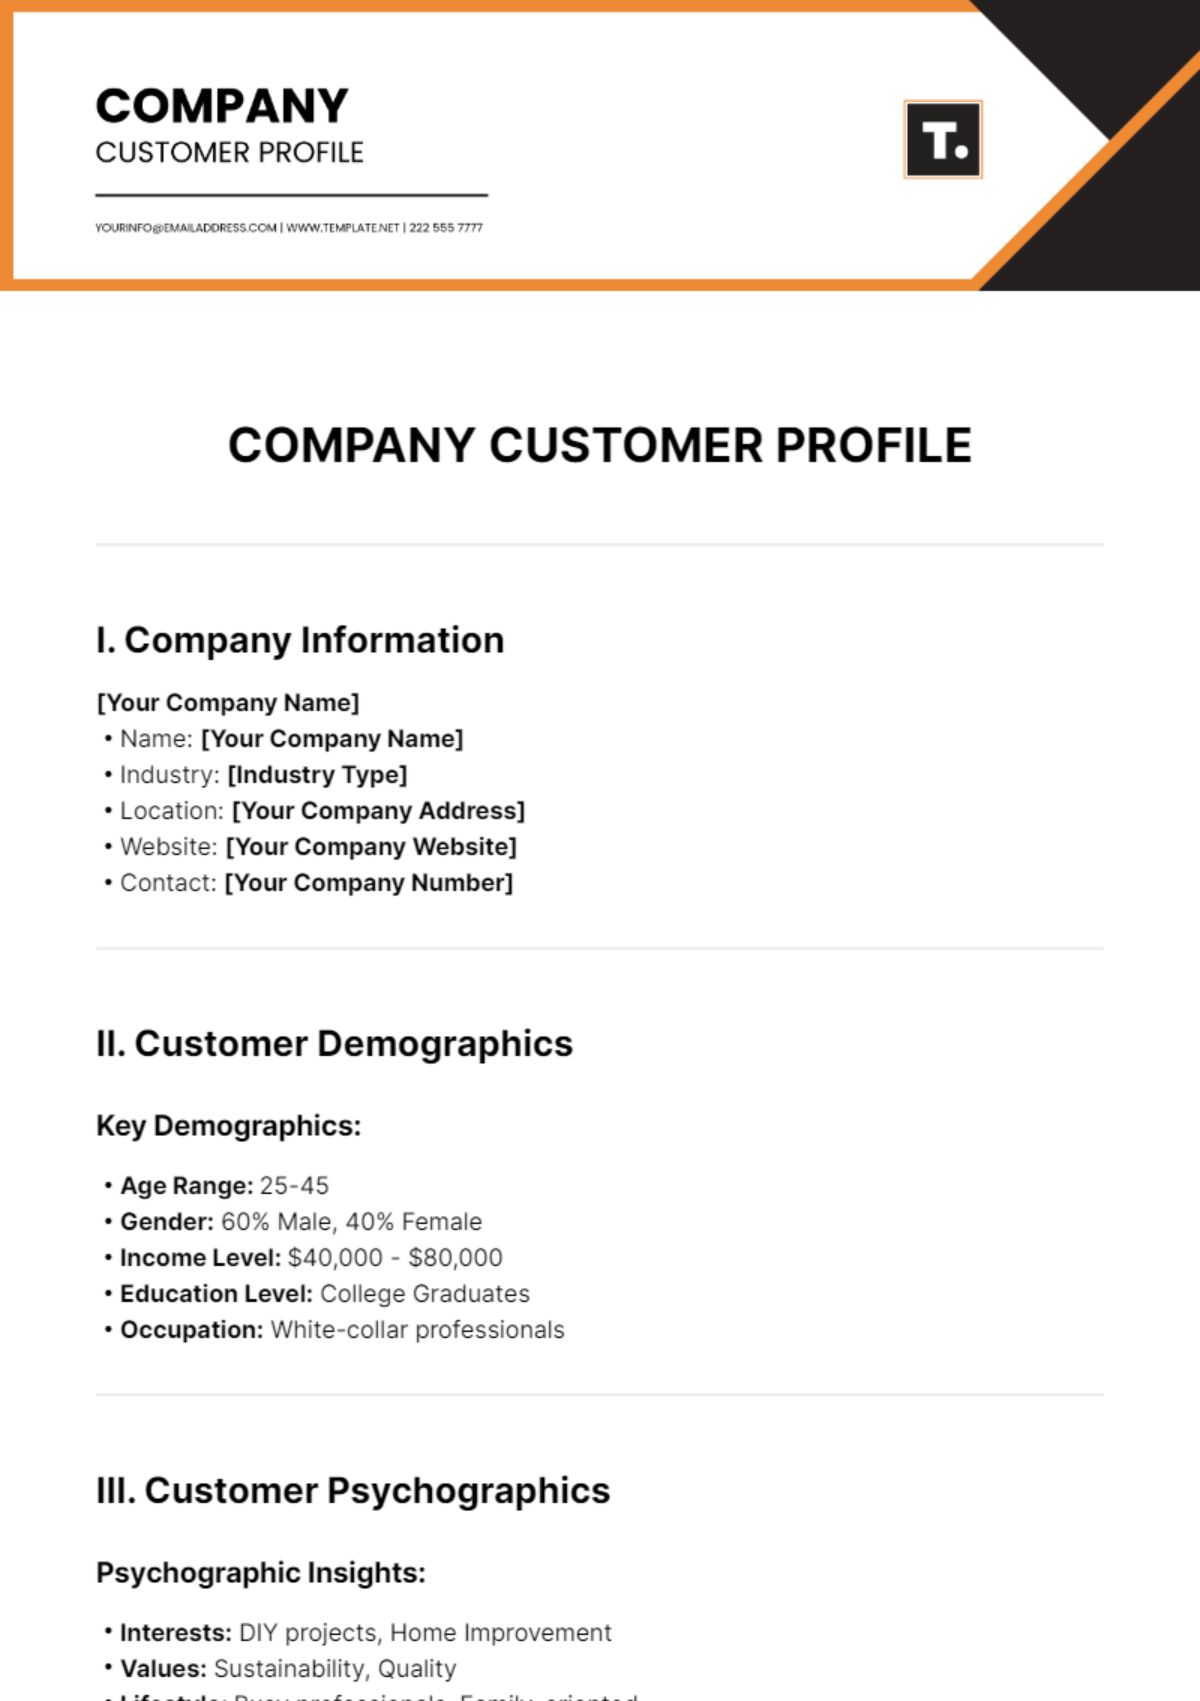 Company Customer Profile Template